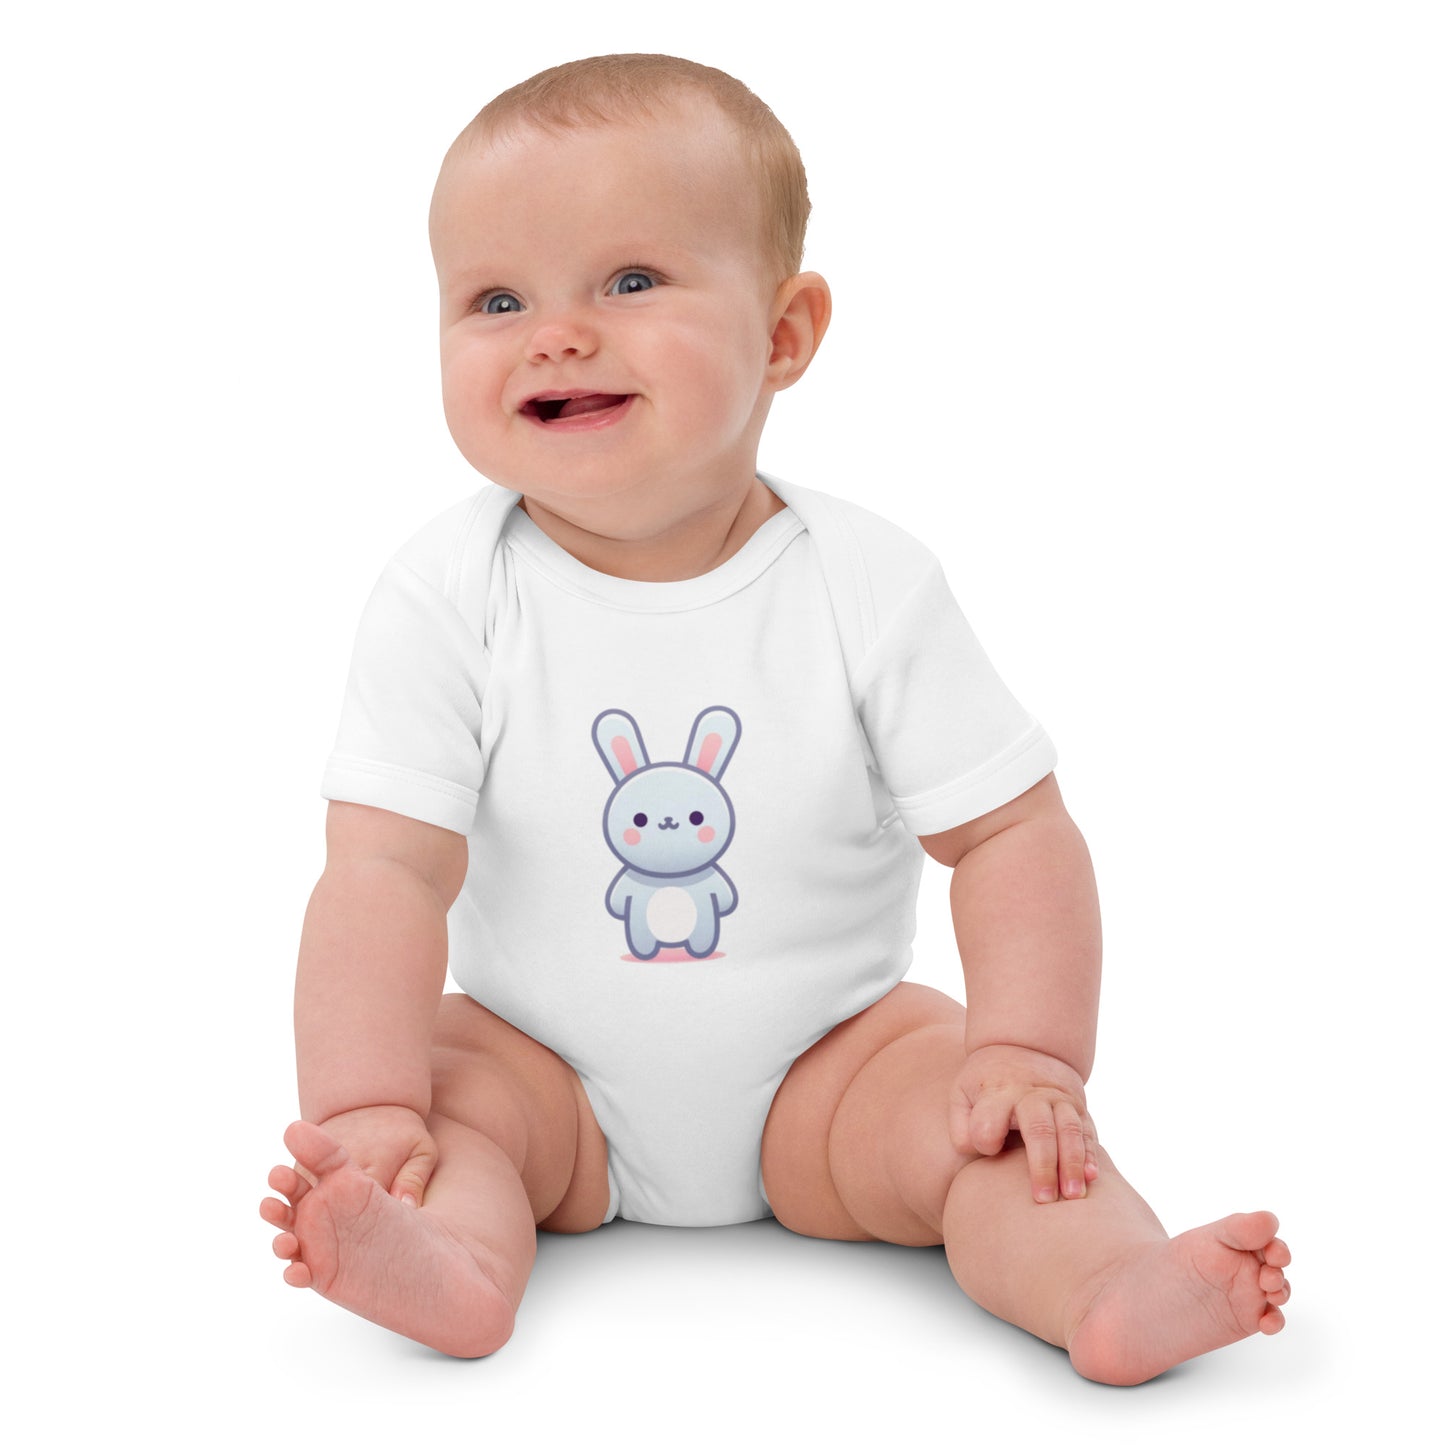 100% Organic Cotton Baby Bodysuit - Gentle on Skin & Eco-Friendly